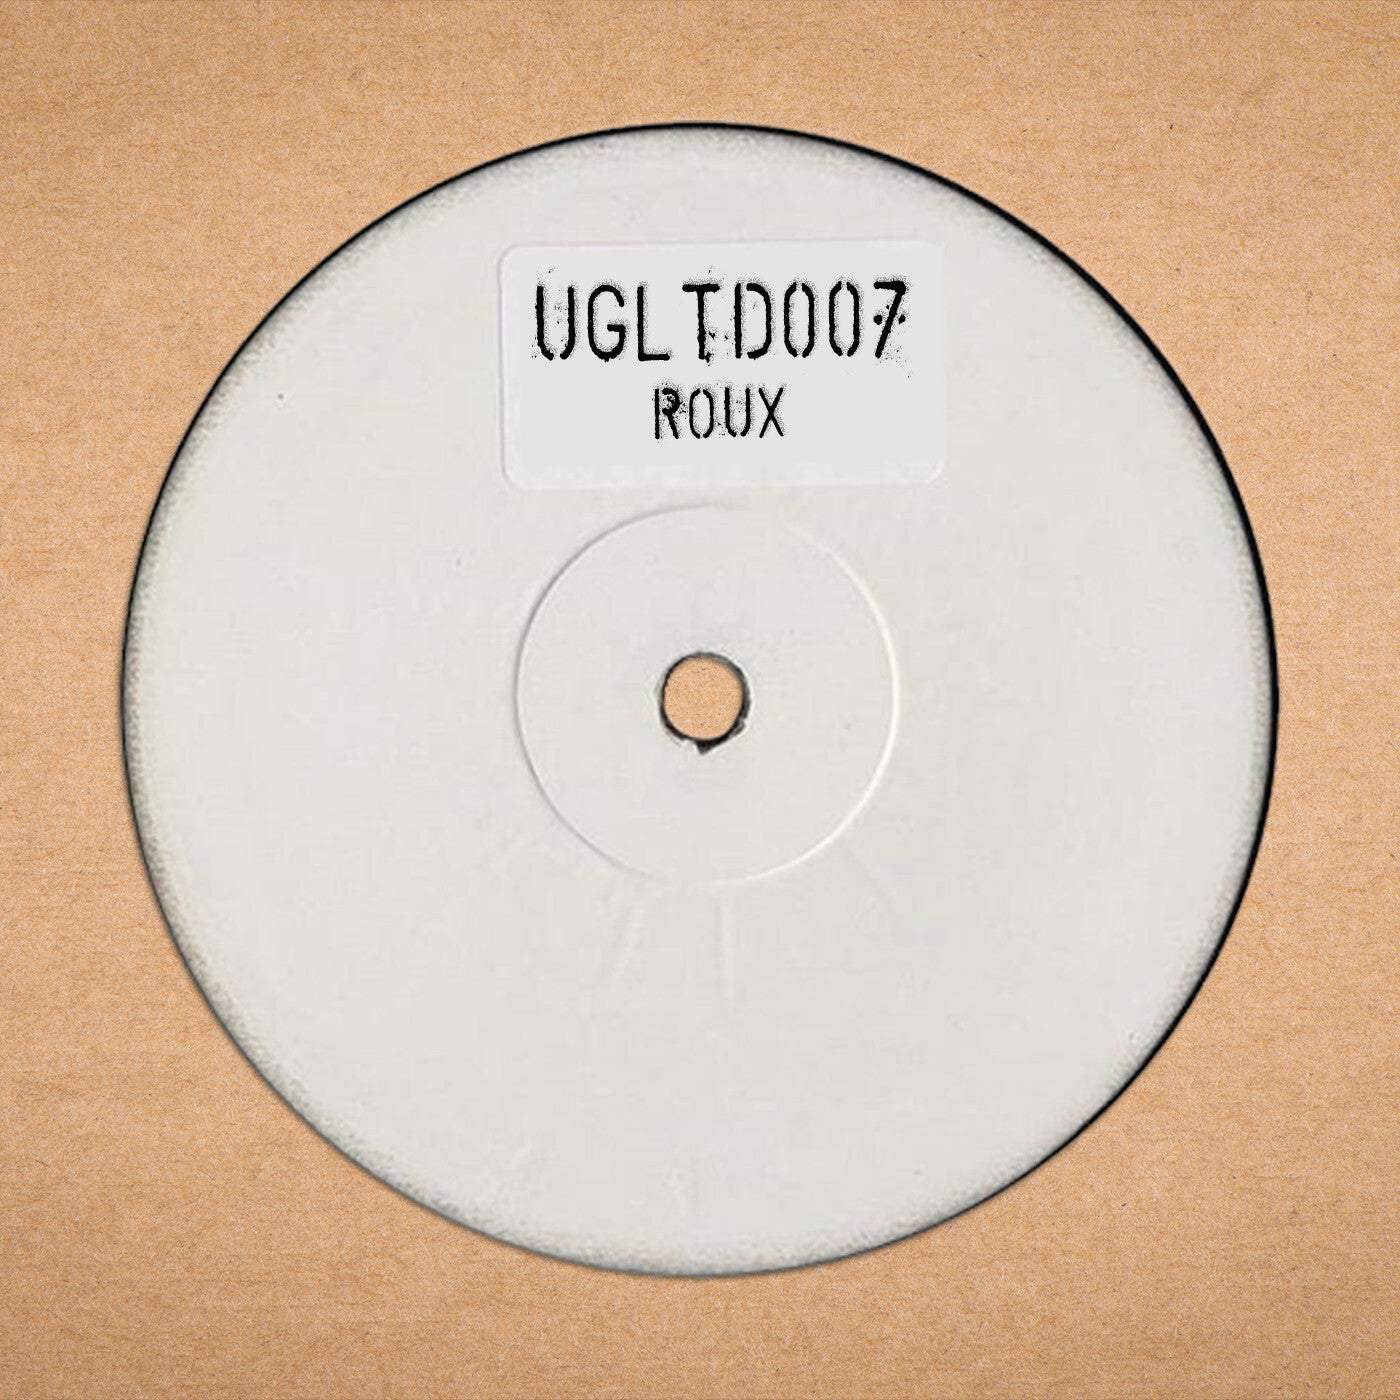 image cover: Roux - Take Flight / UGLTD007